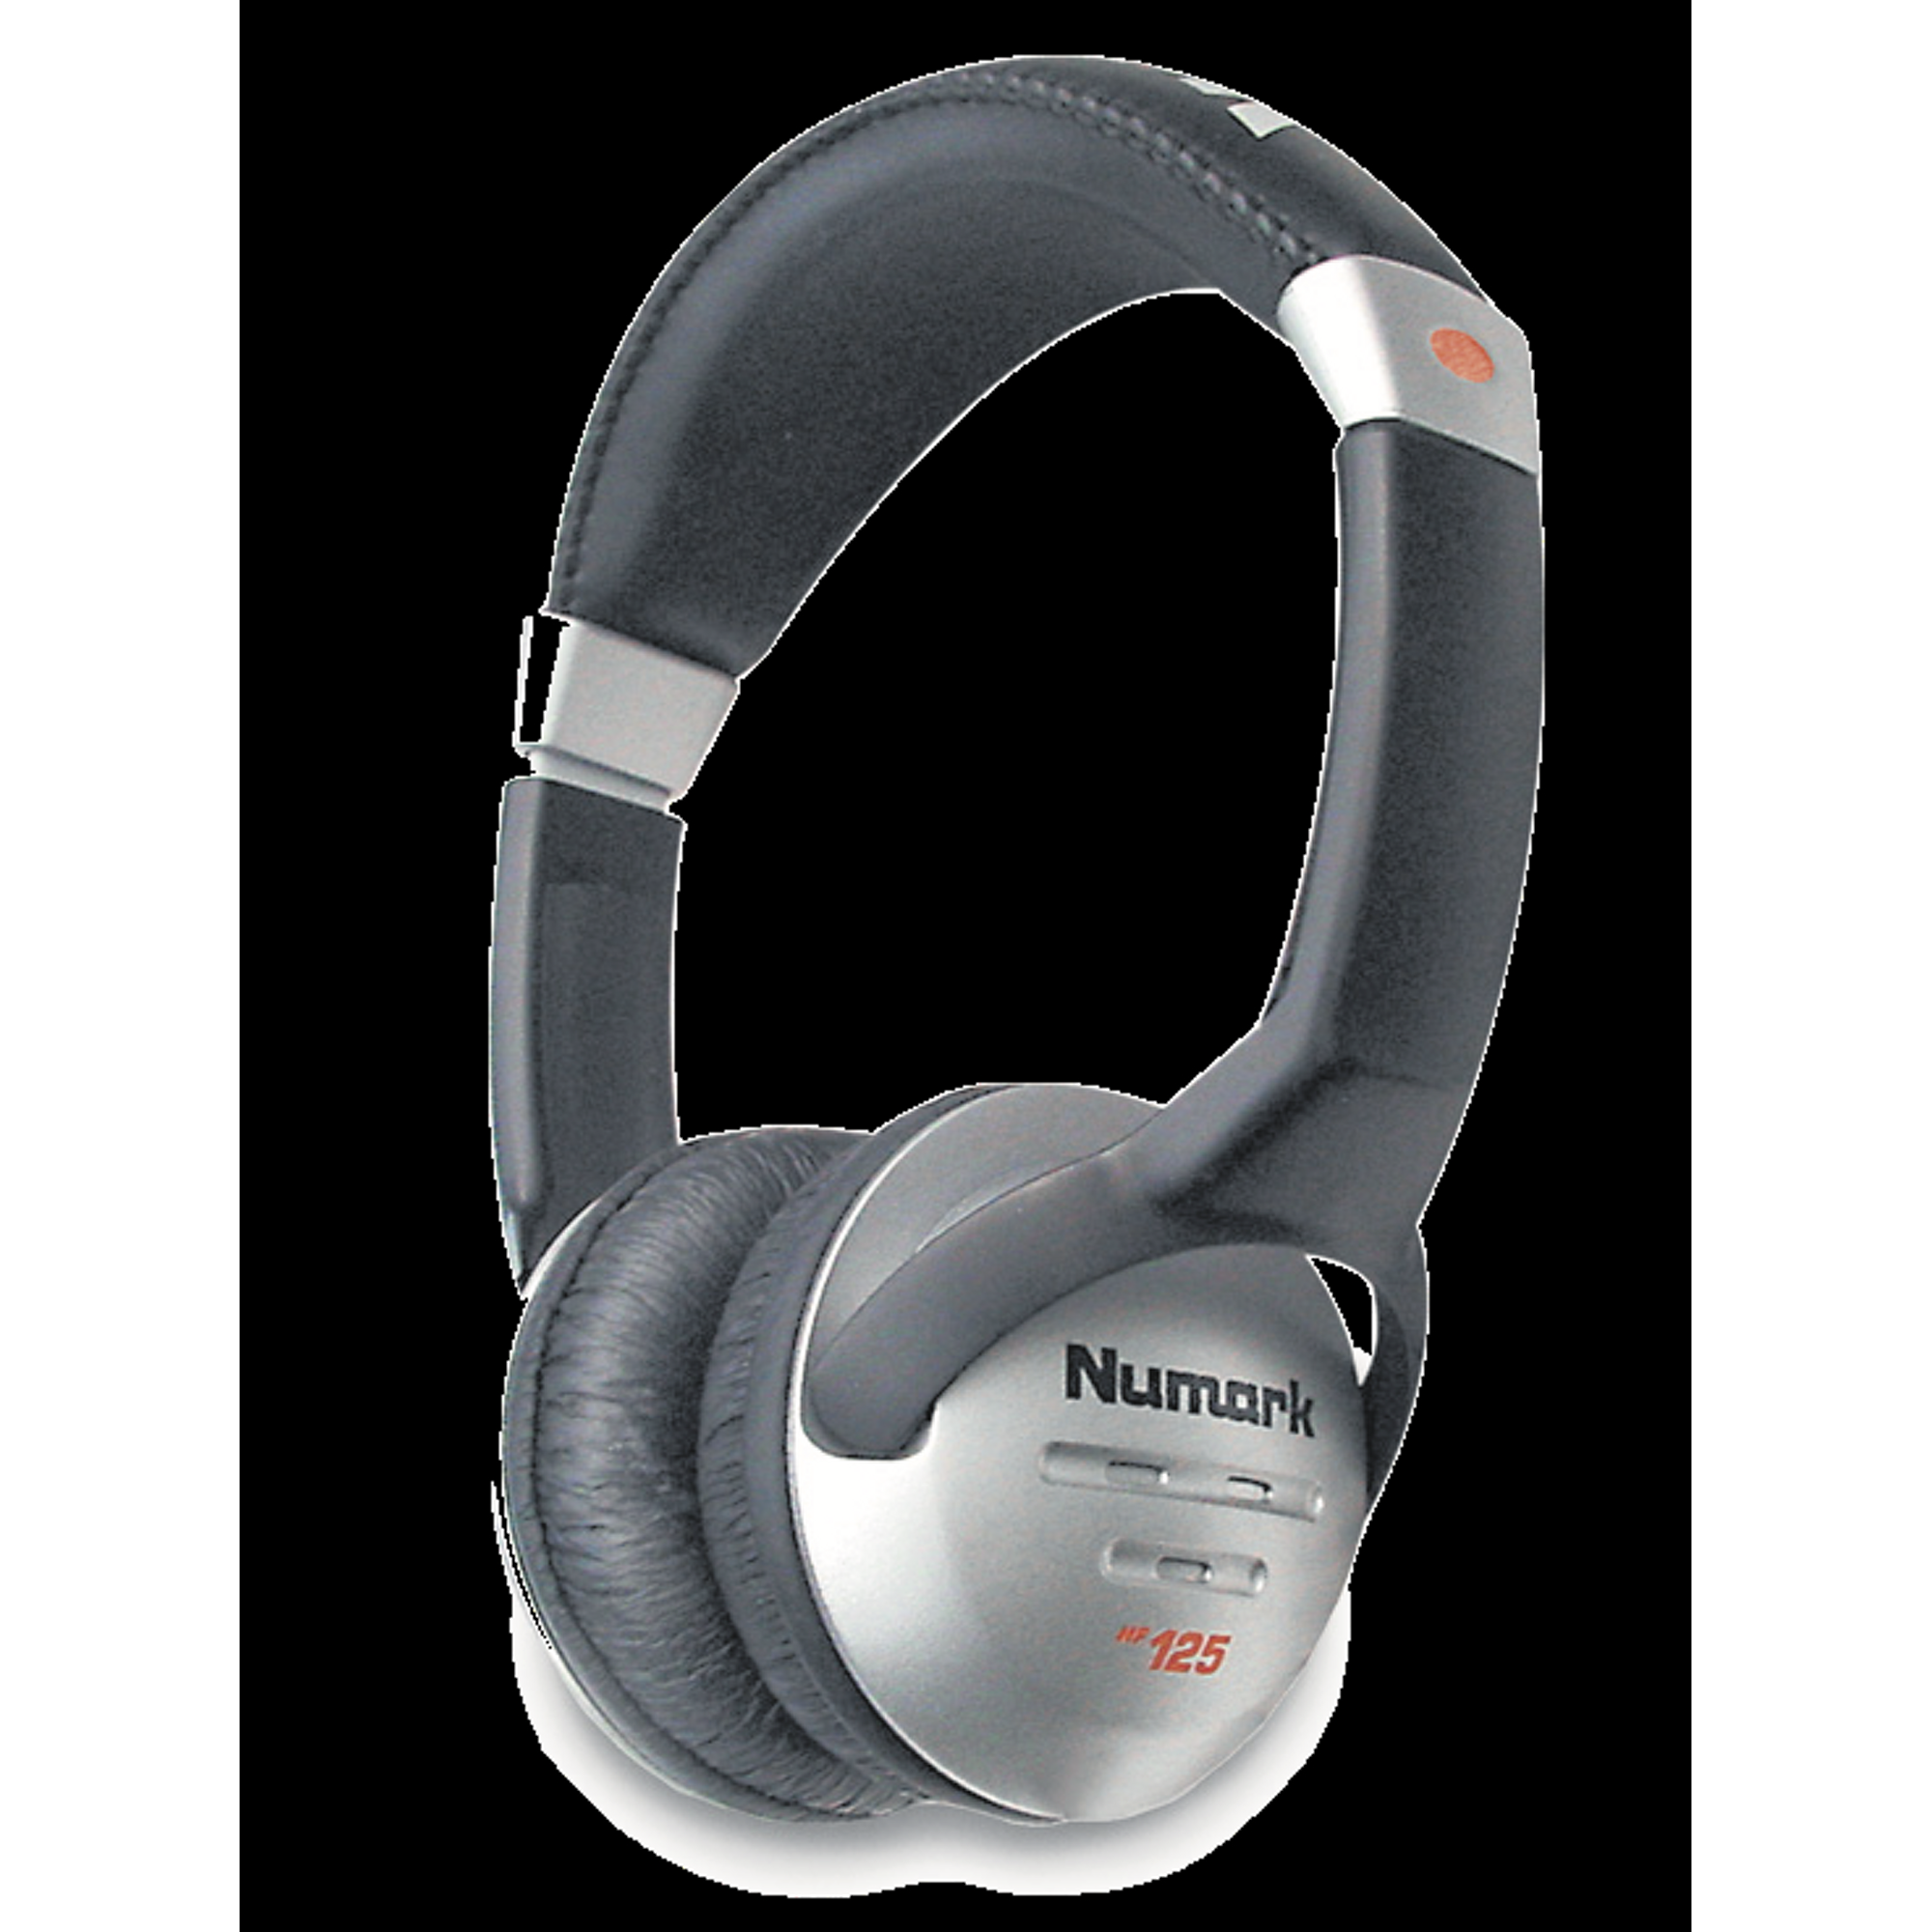 Numark Hf-125 Headphones